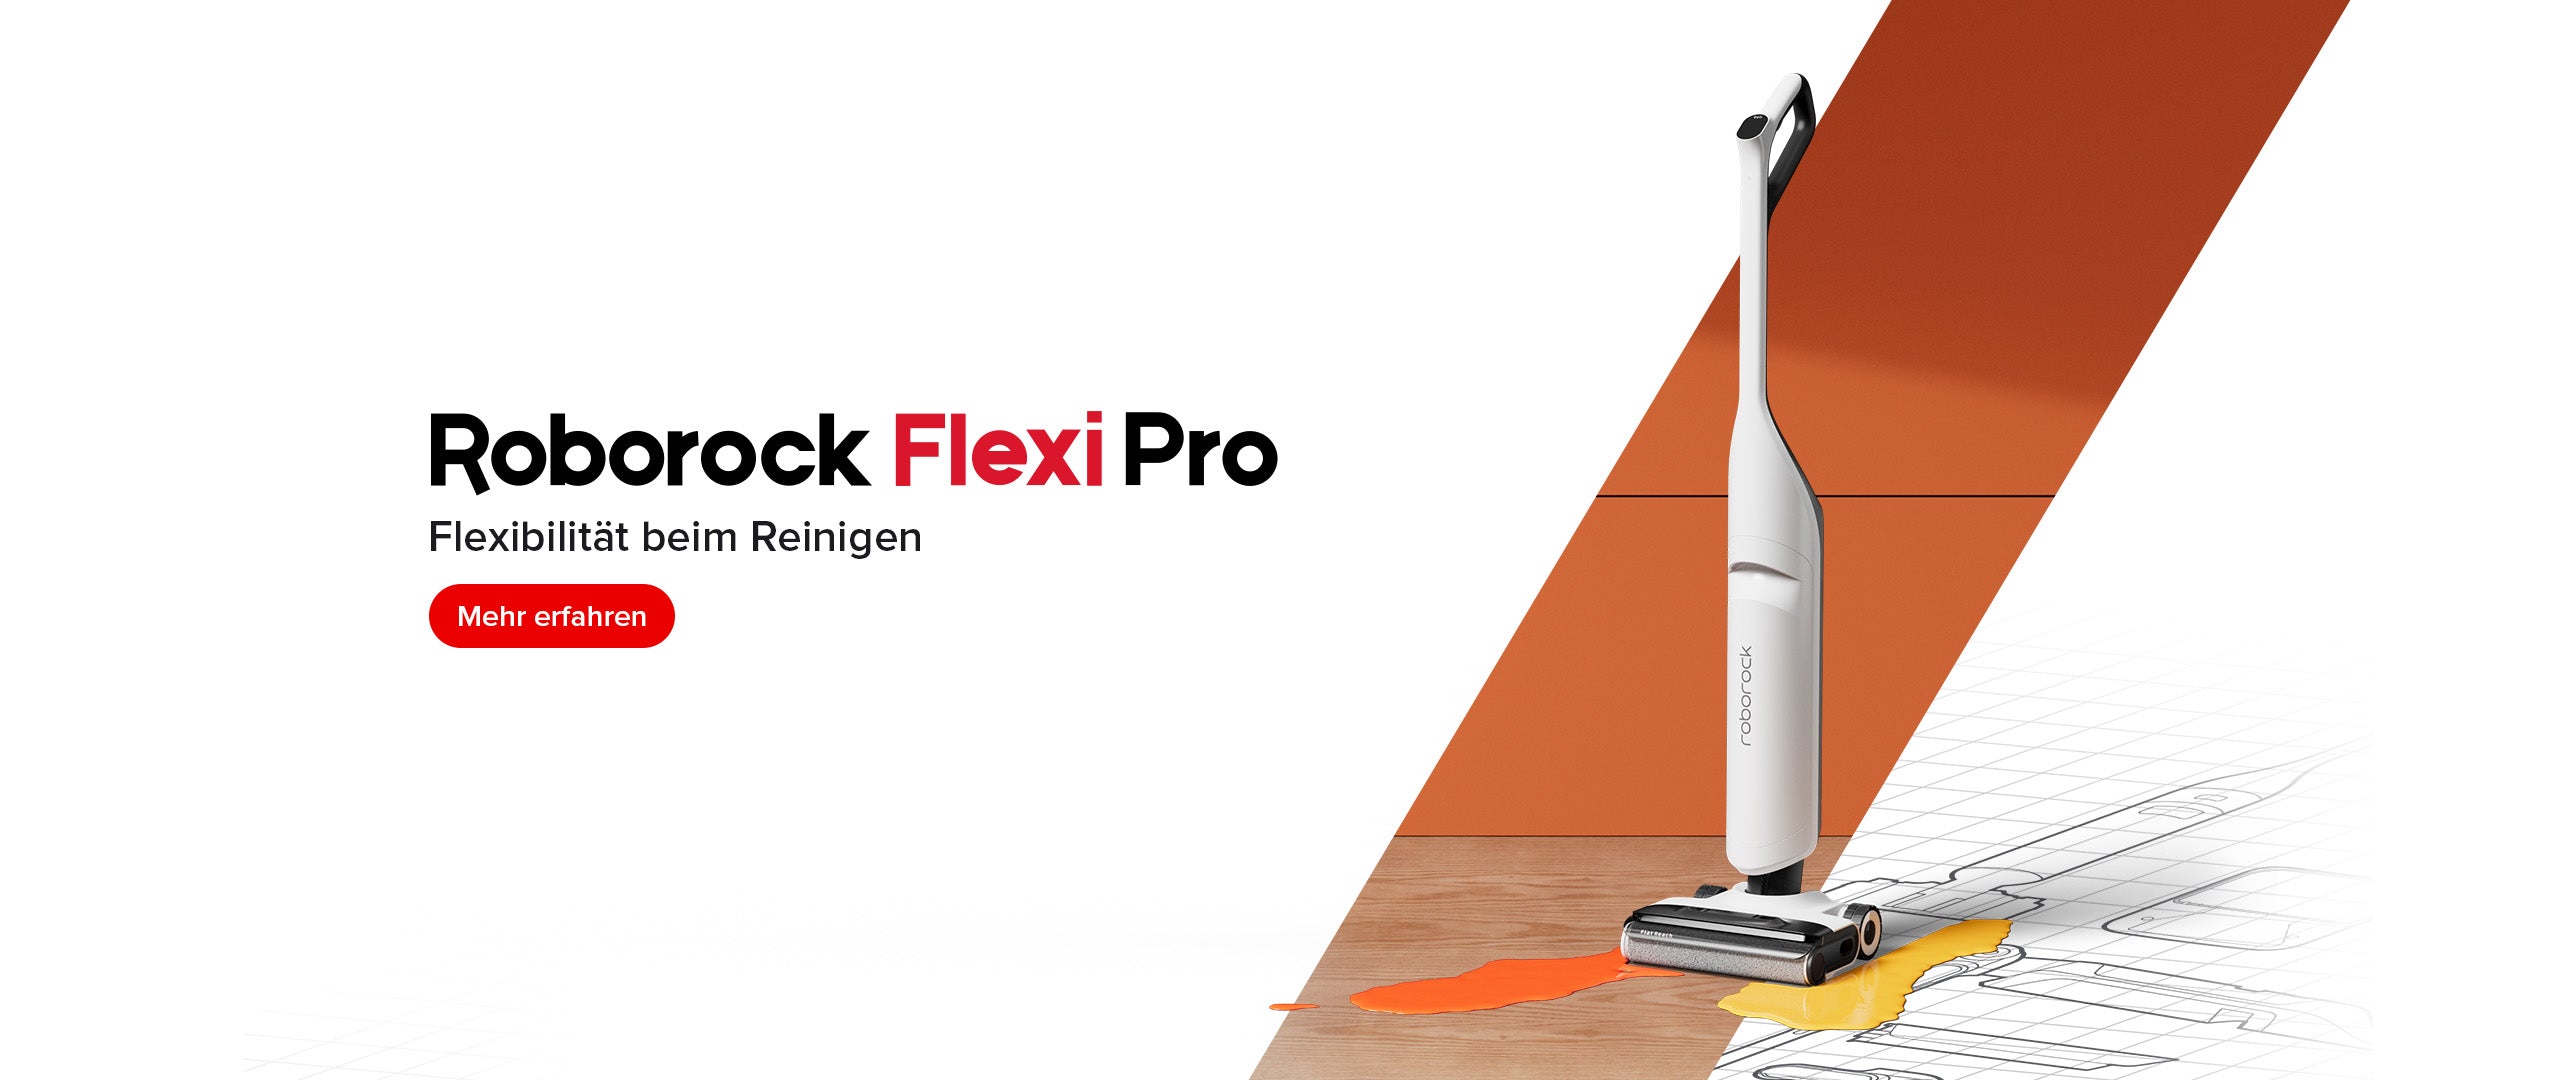 Roborock Flexi Pro